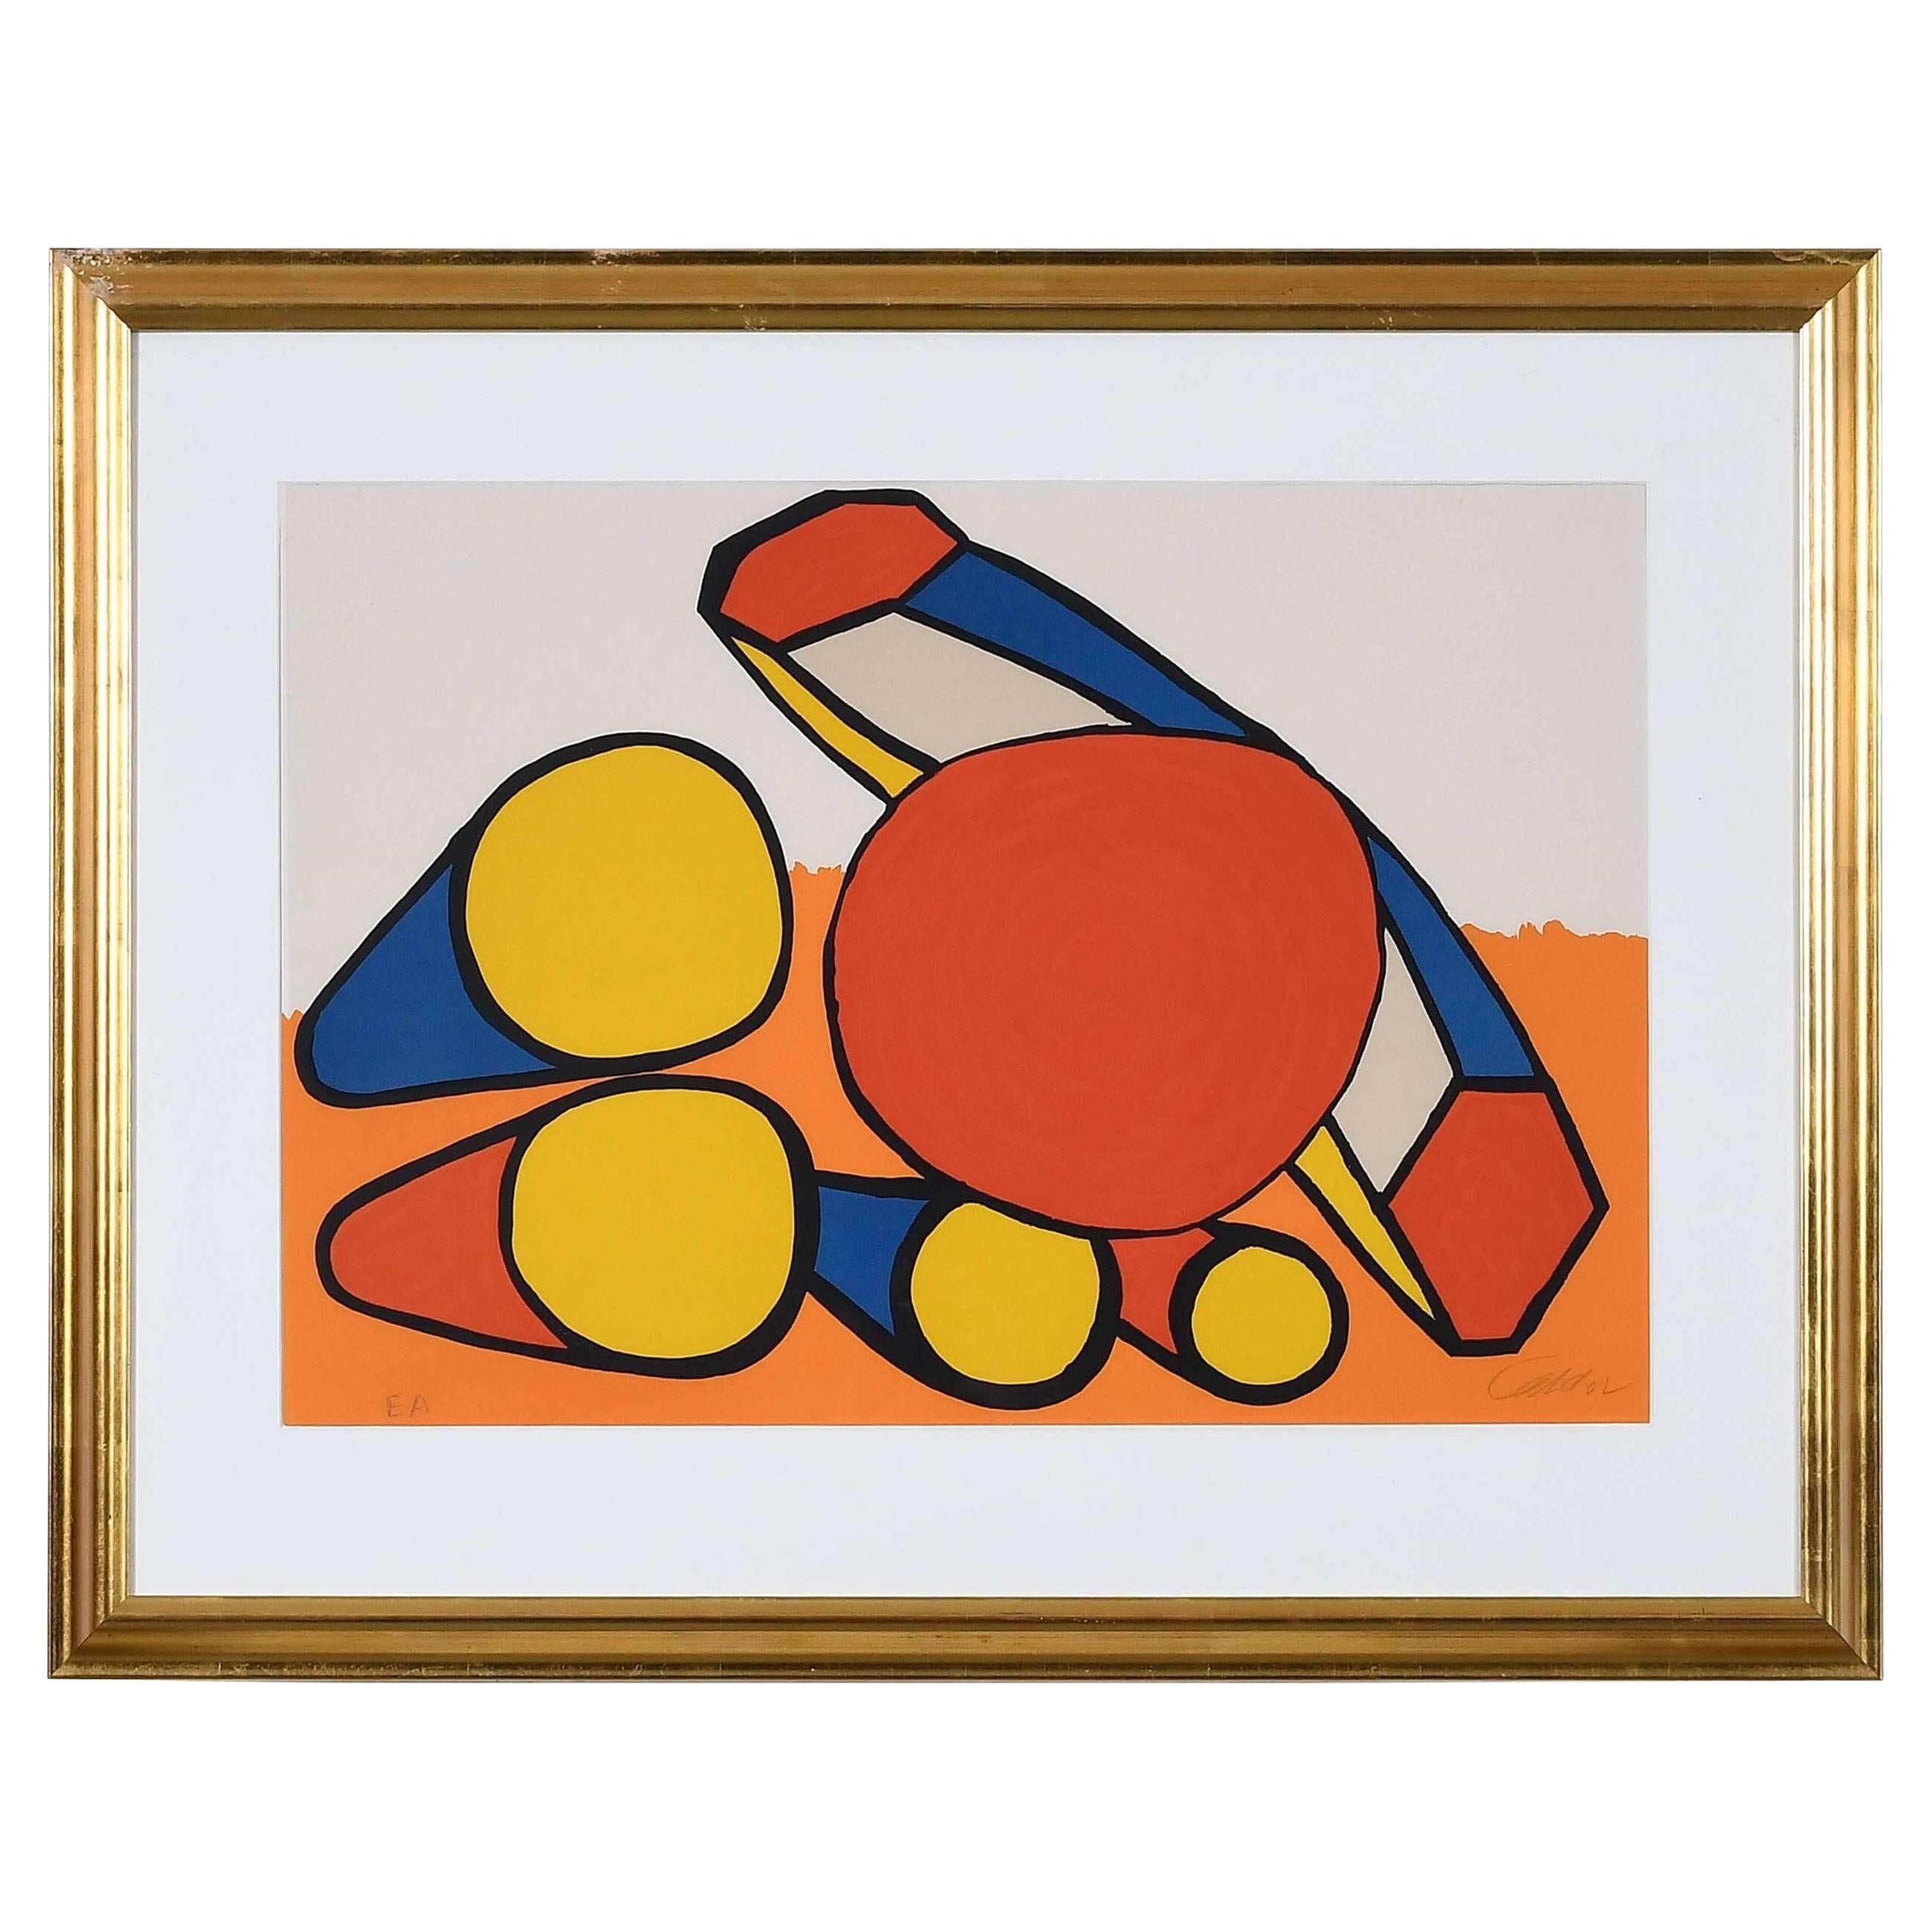 Important Original Signed ARTIST PROOF Alexander Calder Shapes Lithograph